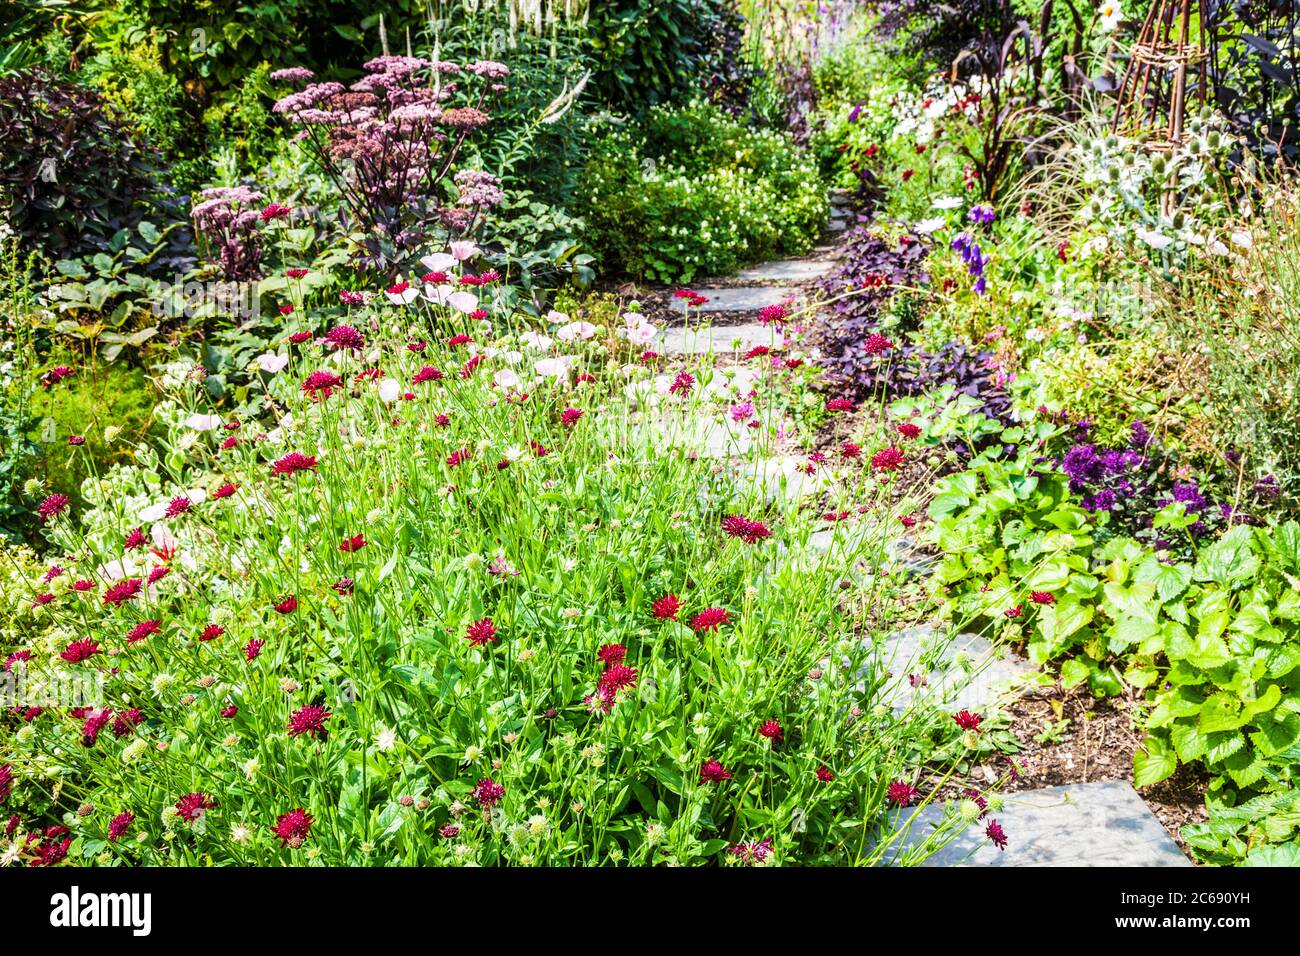 A garden path between shrub and herbaceous borders in an English country garden. Stock Photo